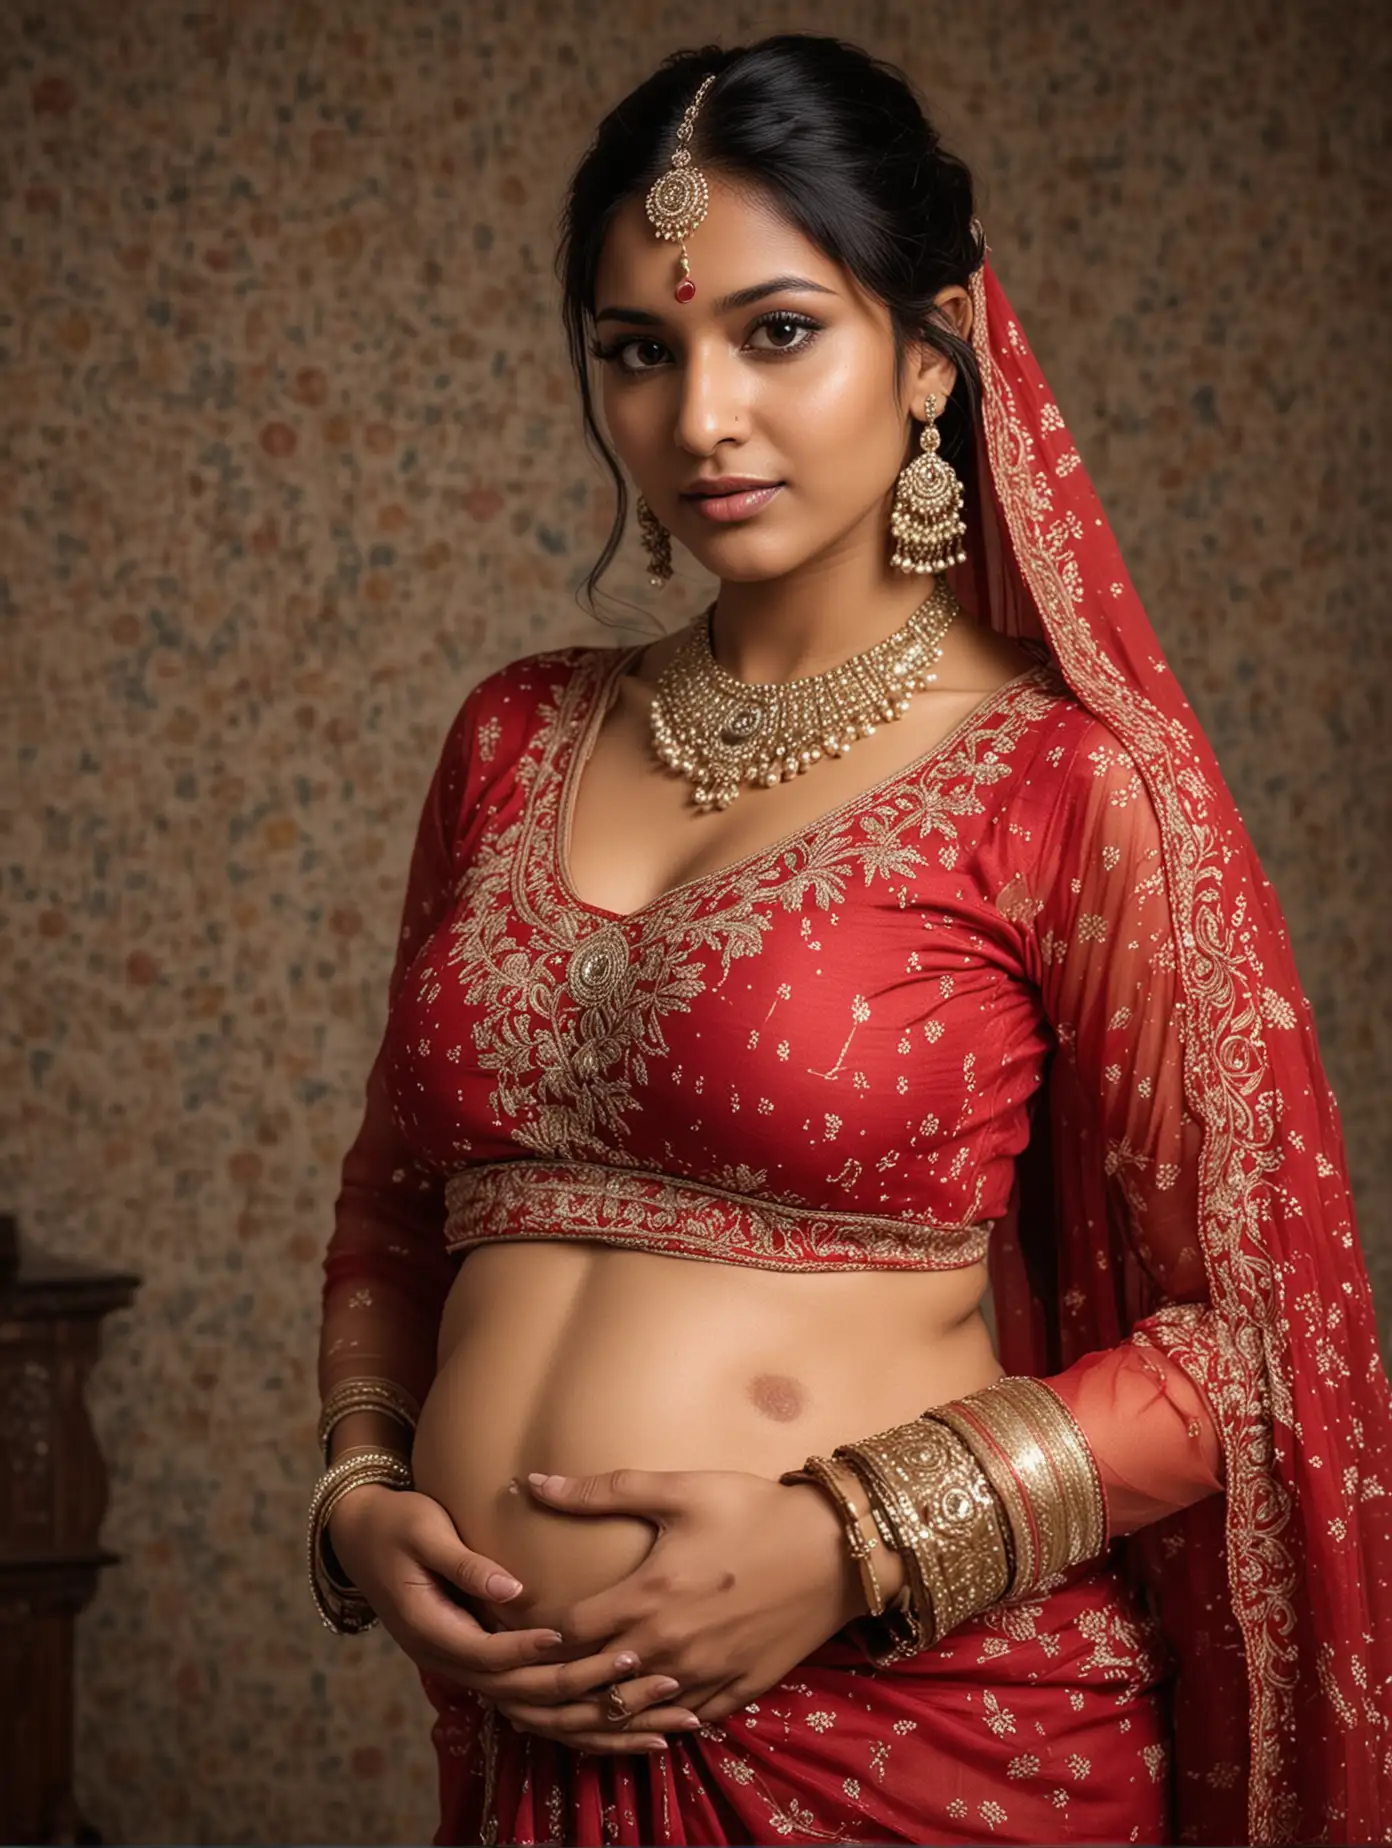 Pregnant Indian Woman in Elegant Attire Radiant Expectations Captured Indoors